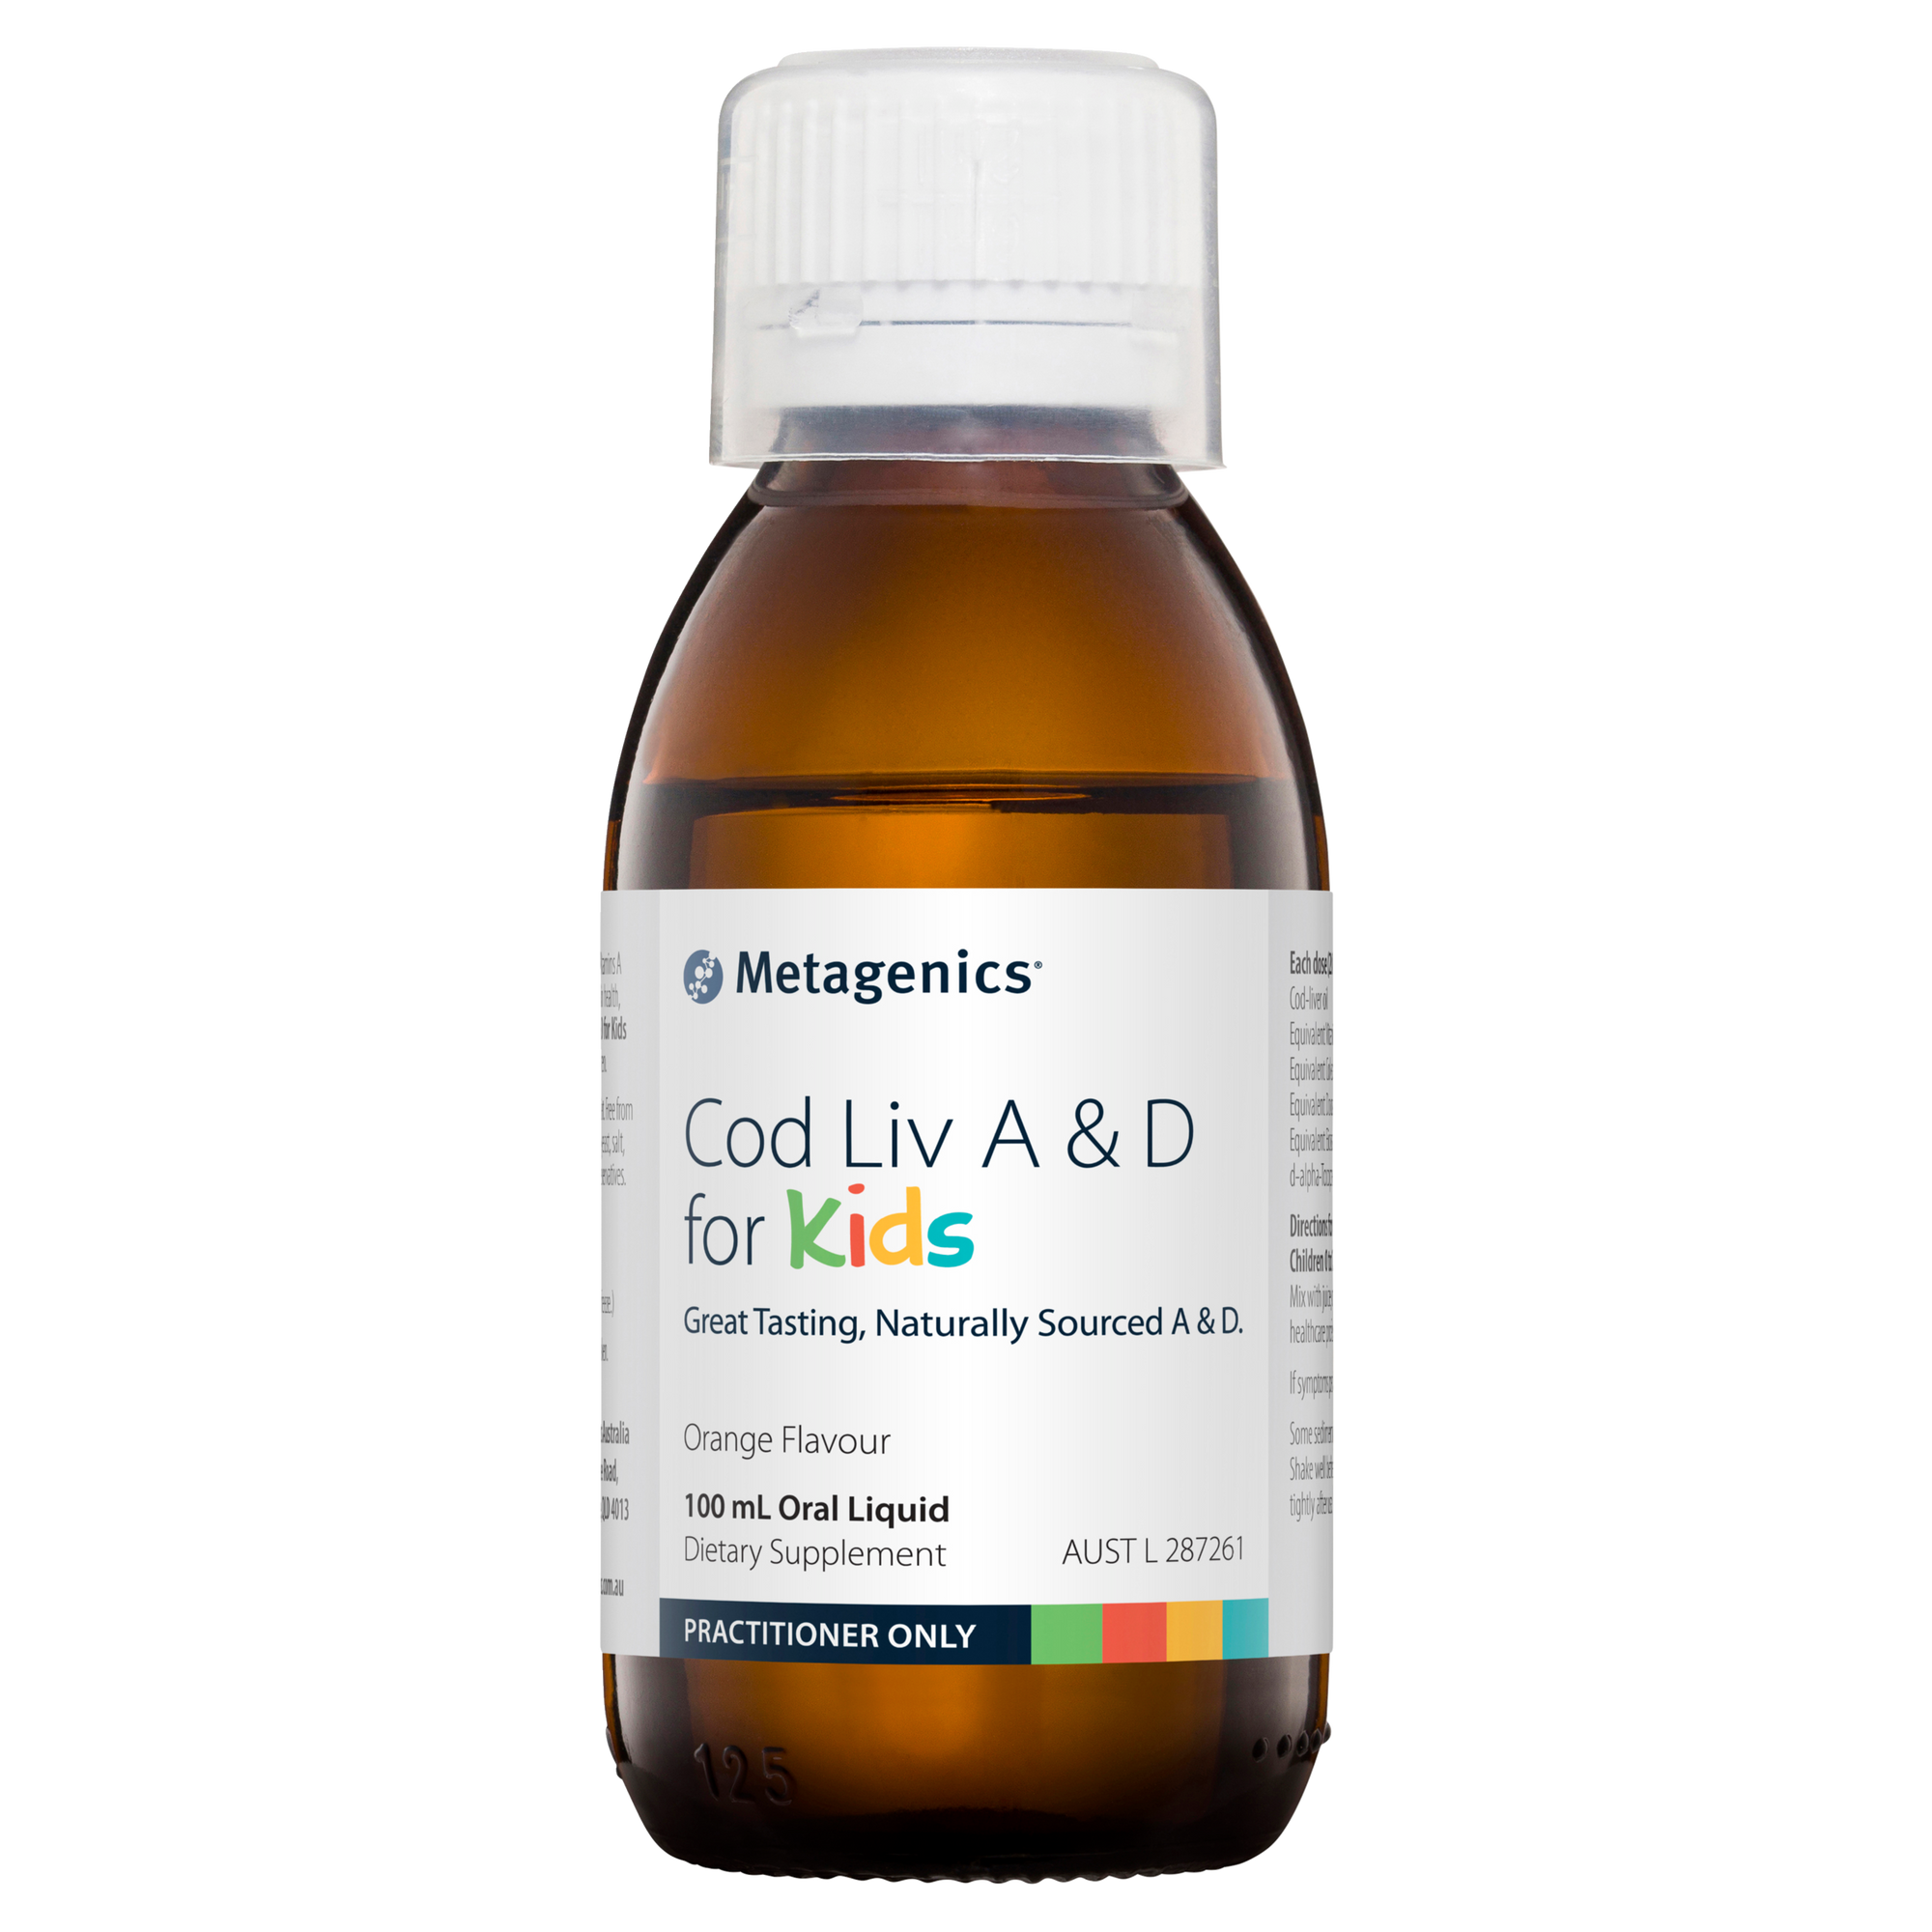 Metagenics Cod Liv A & D for Kids Oral Liquid Orange Flavour 100 mL